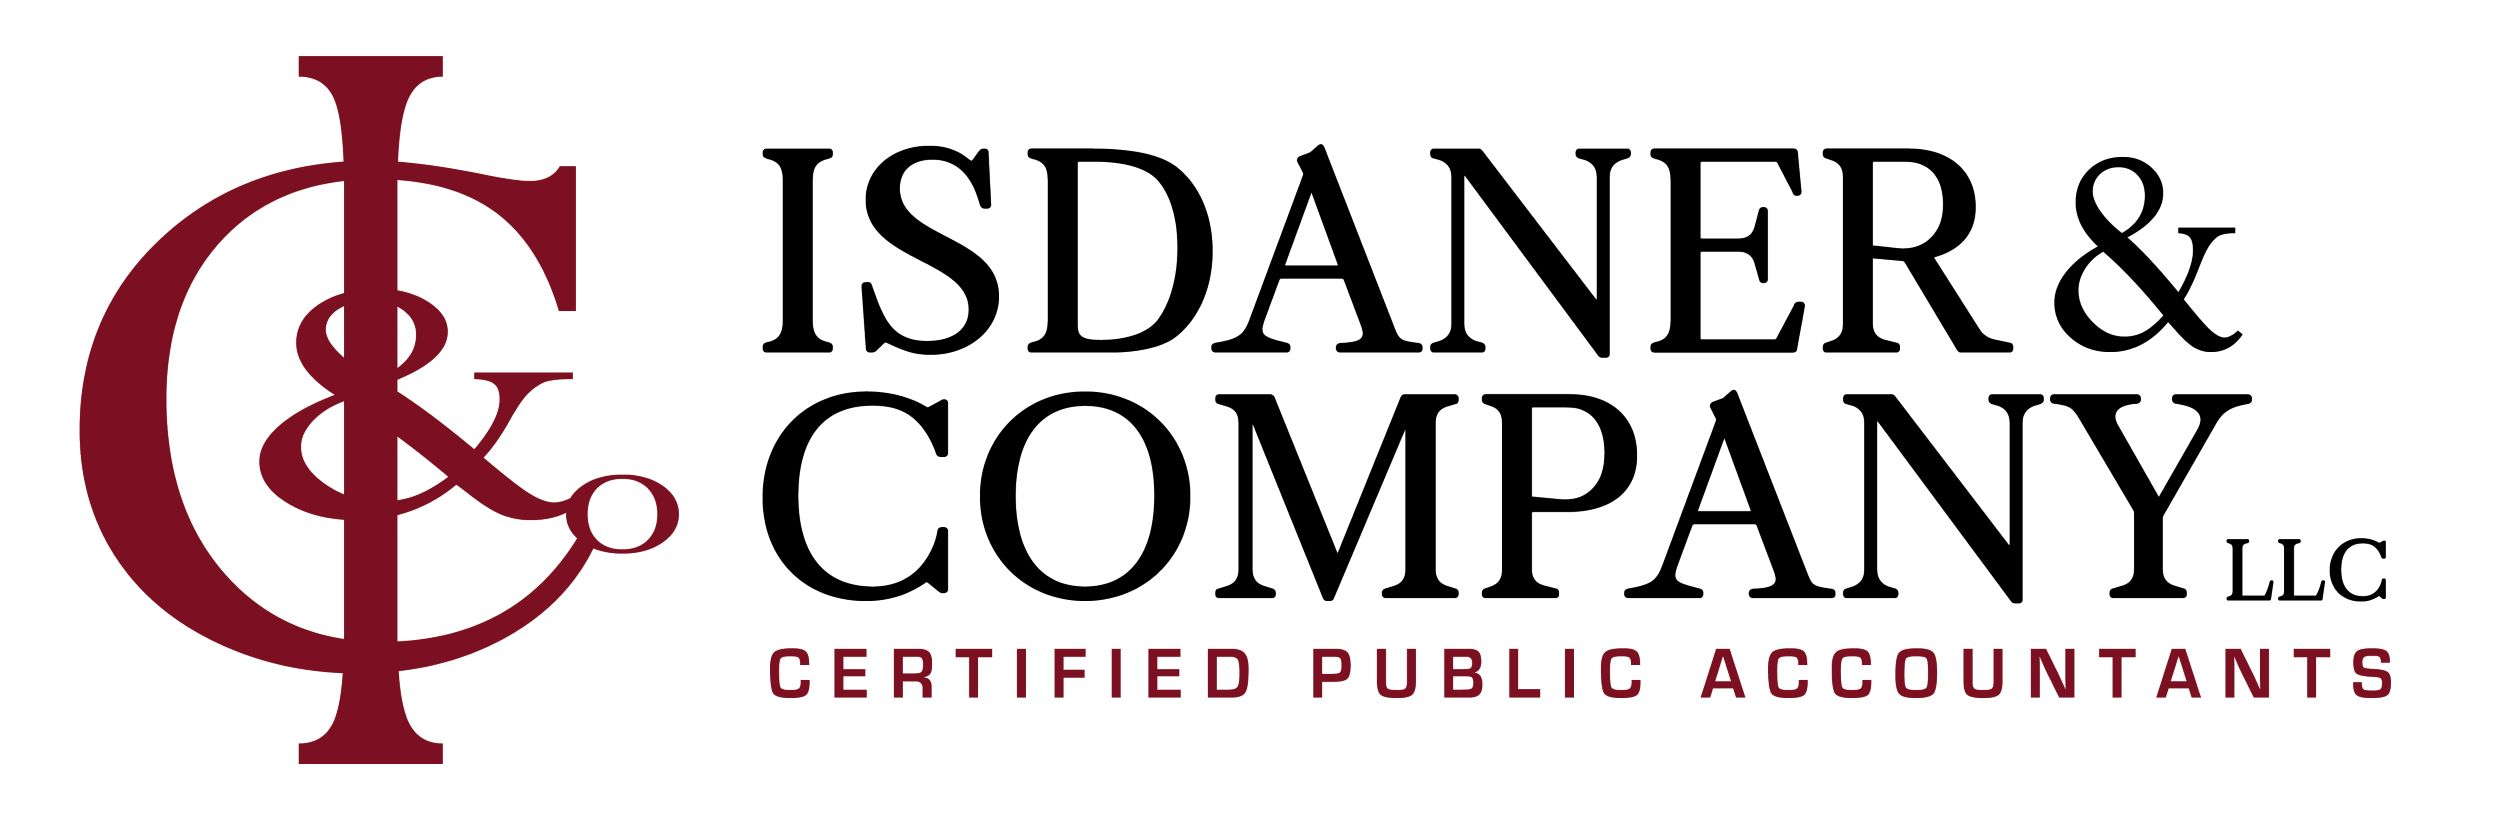 Isdaner & Company, LLC logo